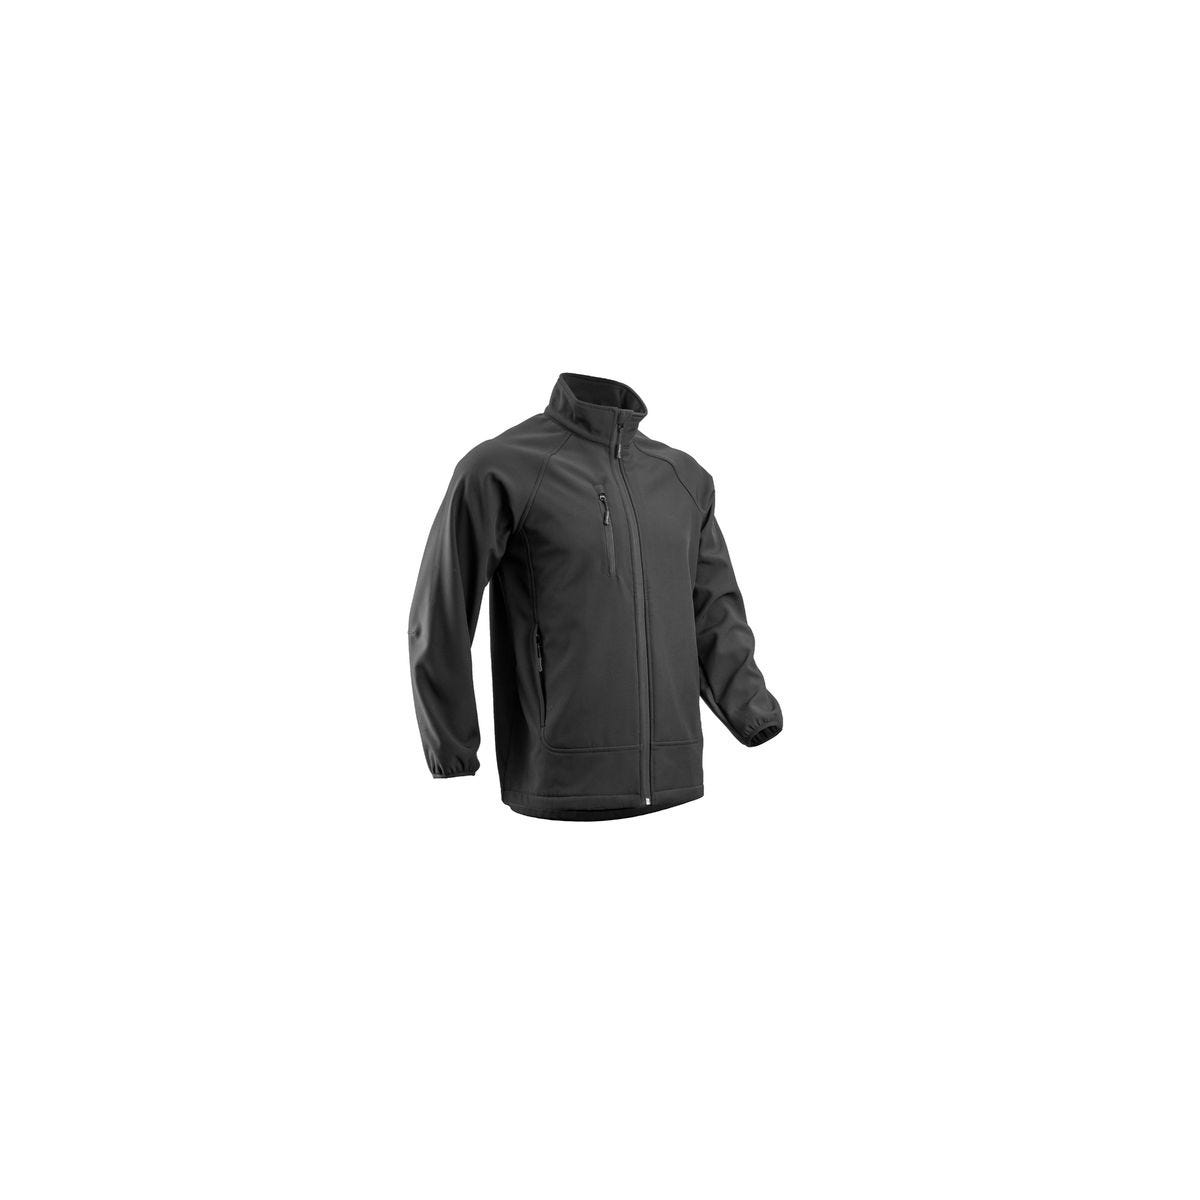 SOBA Veste Softshell noire, homme, 290g/m² - COVERGUARD - Taille S 0